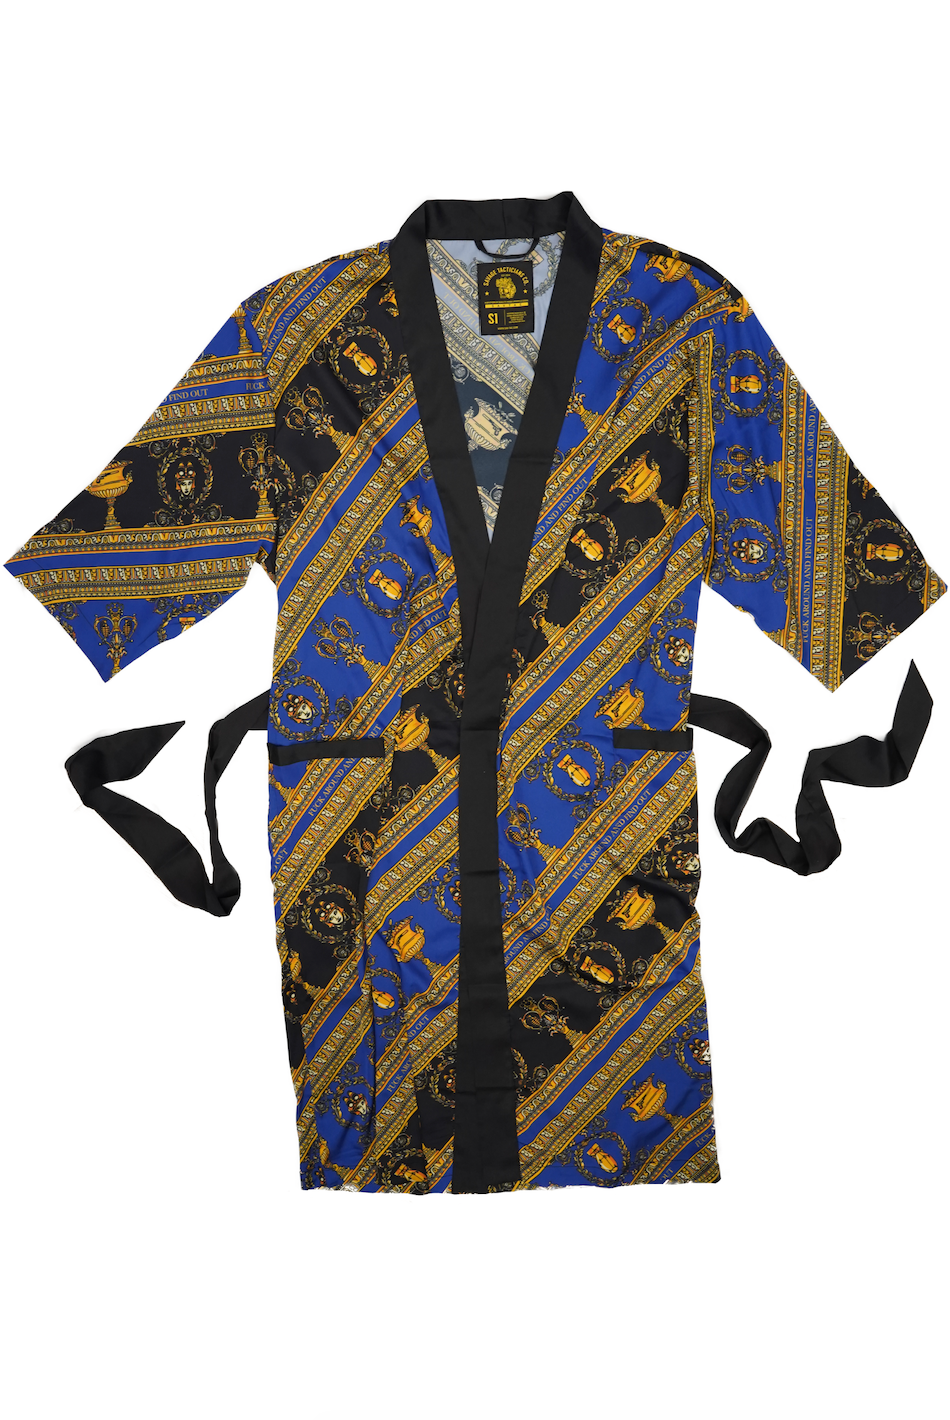 SavTac Savage Kimono Silk Robe - Medusa